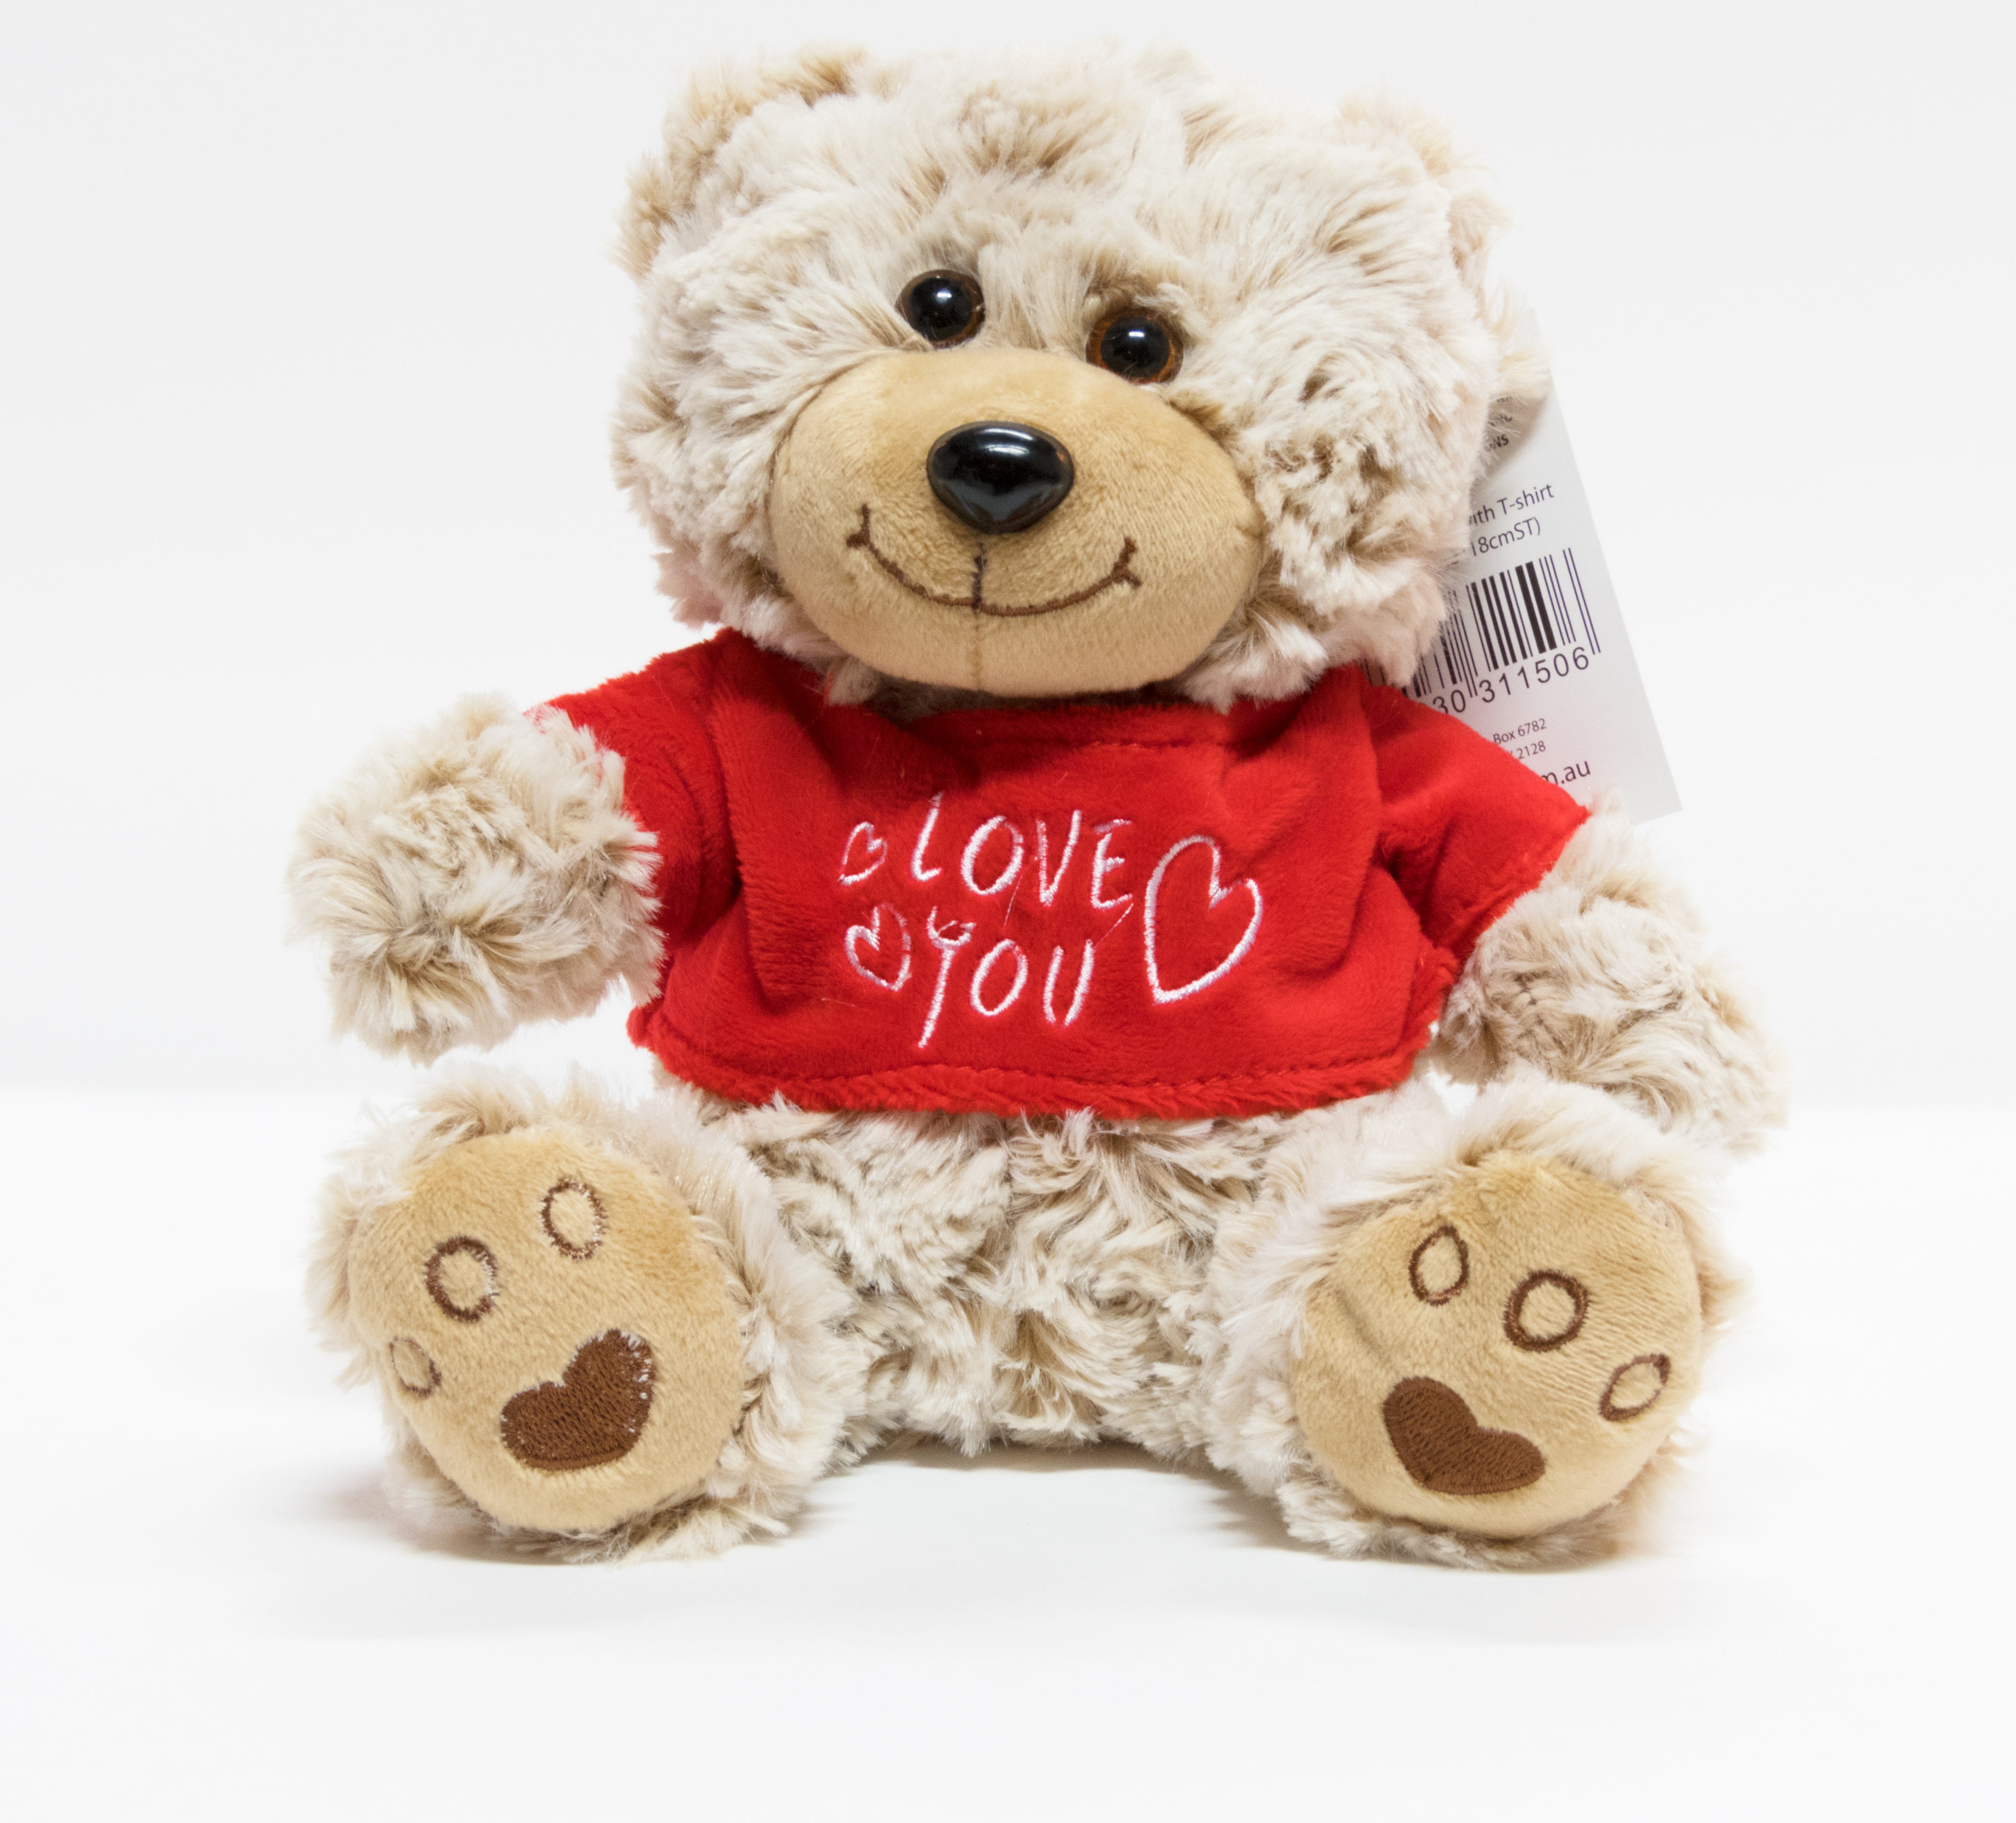 Thomas Teddy Bear with T-shirt "Love You"